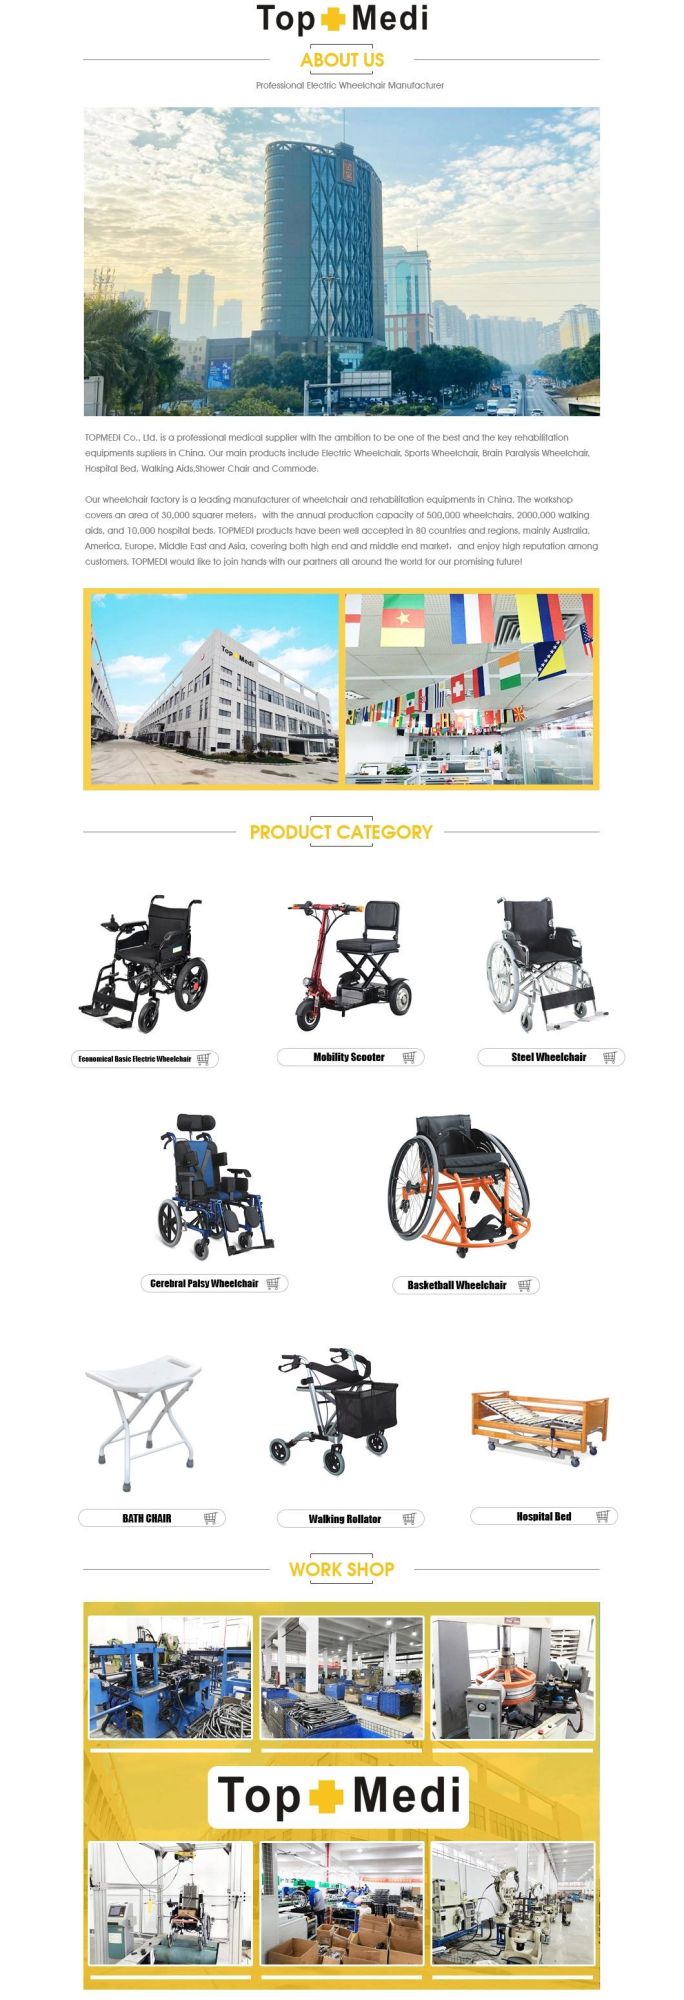 Airportwheelchair/ Tranist Lightweight Wheelchair with Aluminum Frame